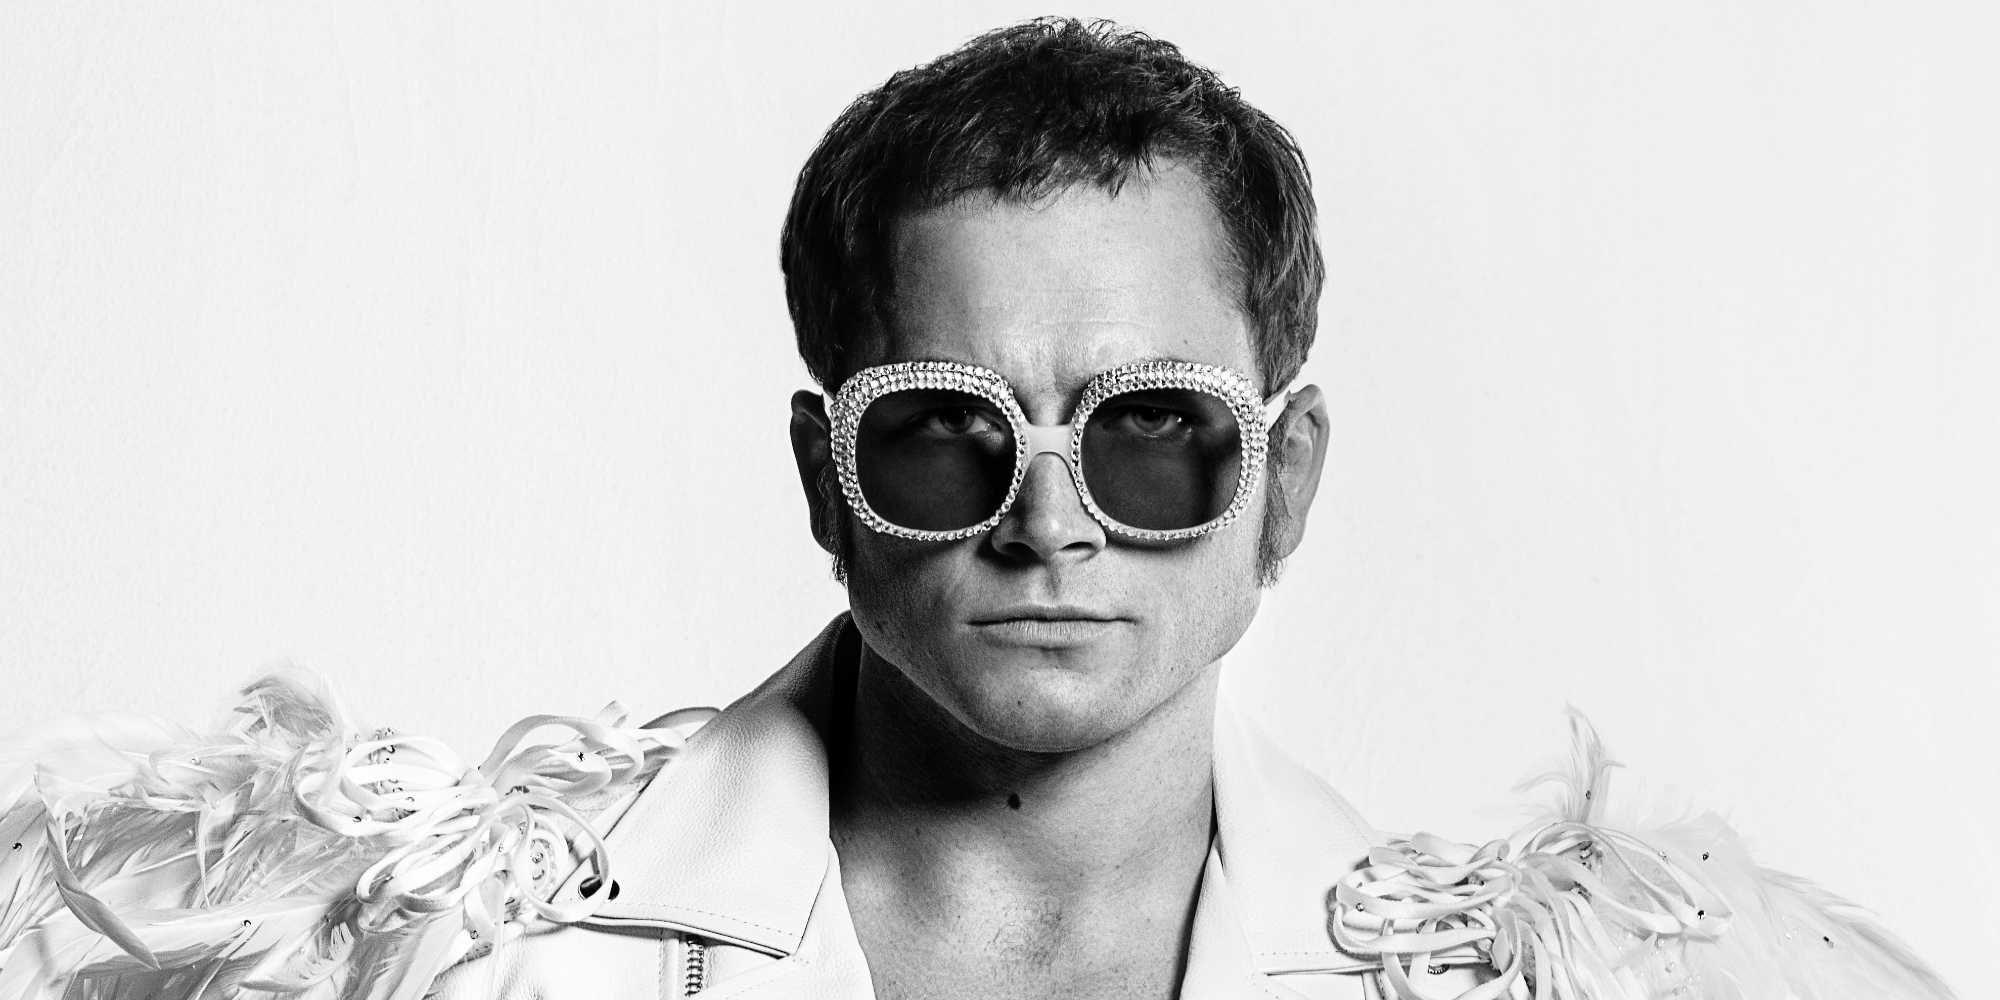 Rocketman Movie Image: New Looks At Taron Egerton As Elton John